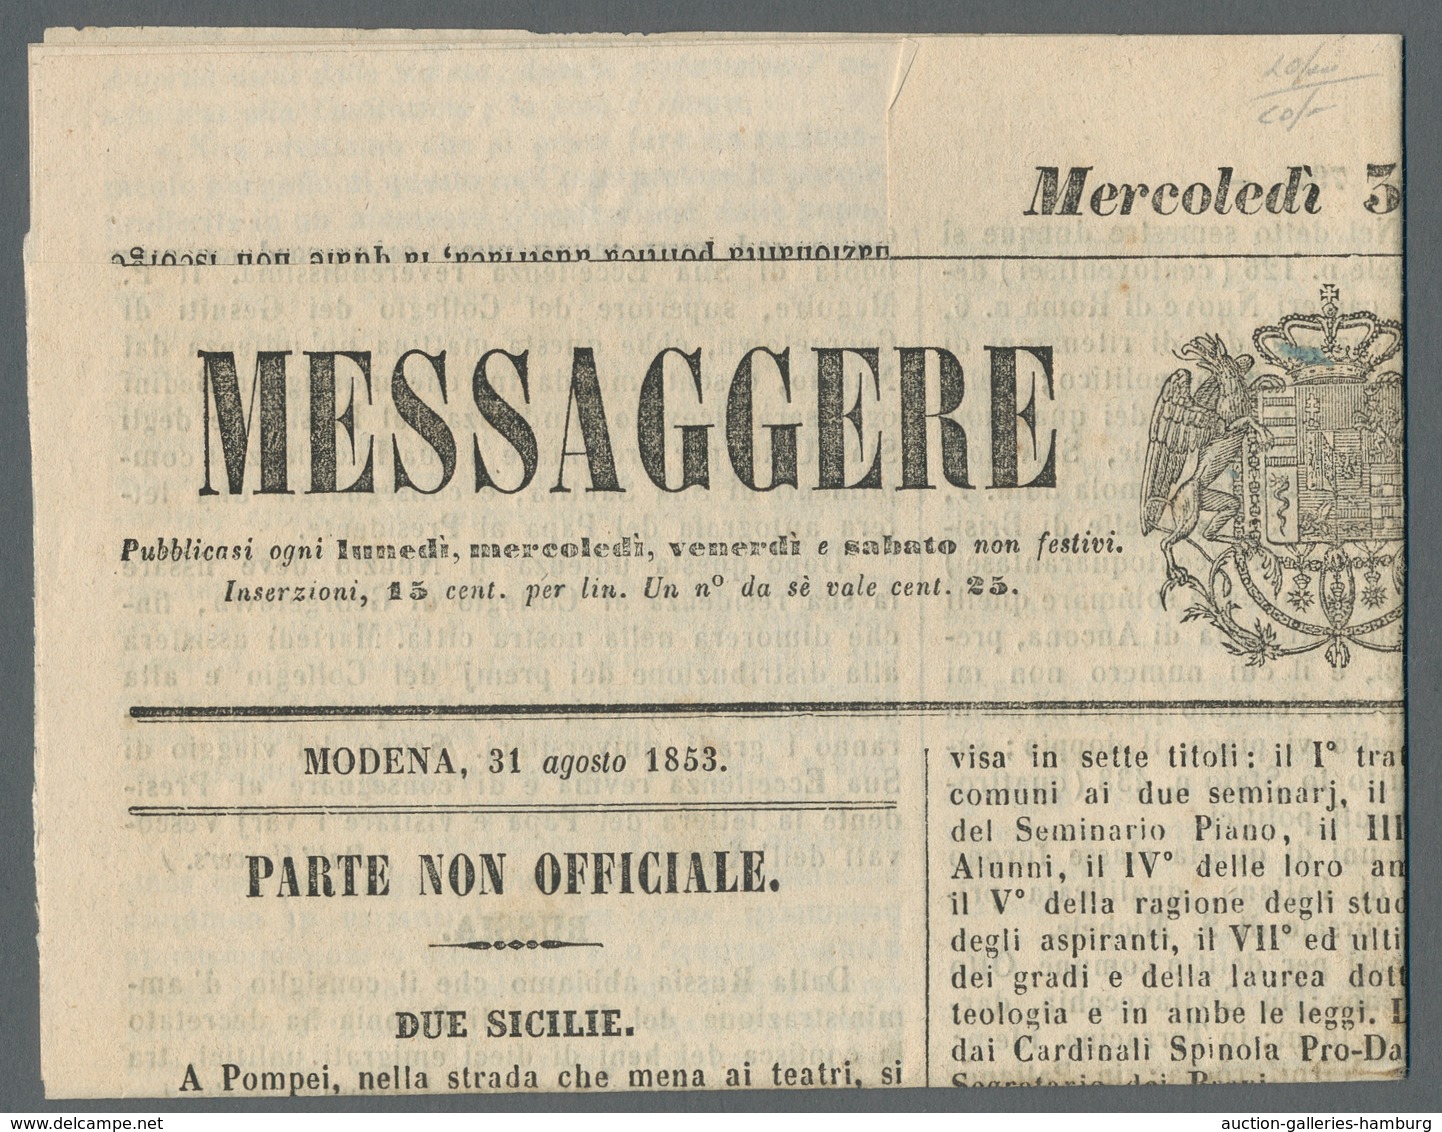 Italien - Altitalienische Staaten: Modena: 1852, 5 Centesimi Verde, 5 C. Green On Newspaper "Message - Modena